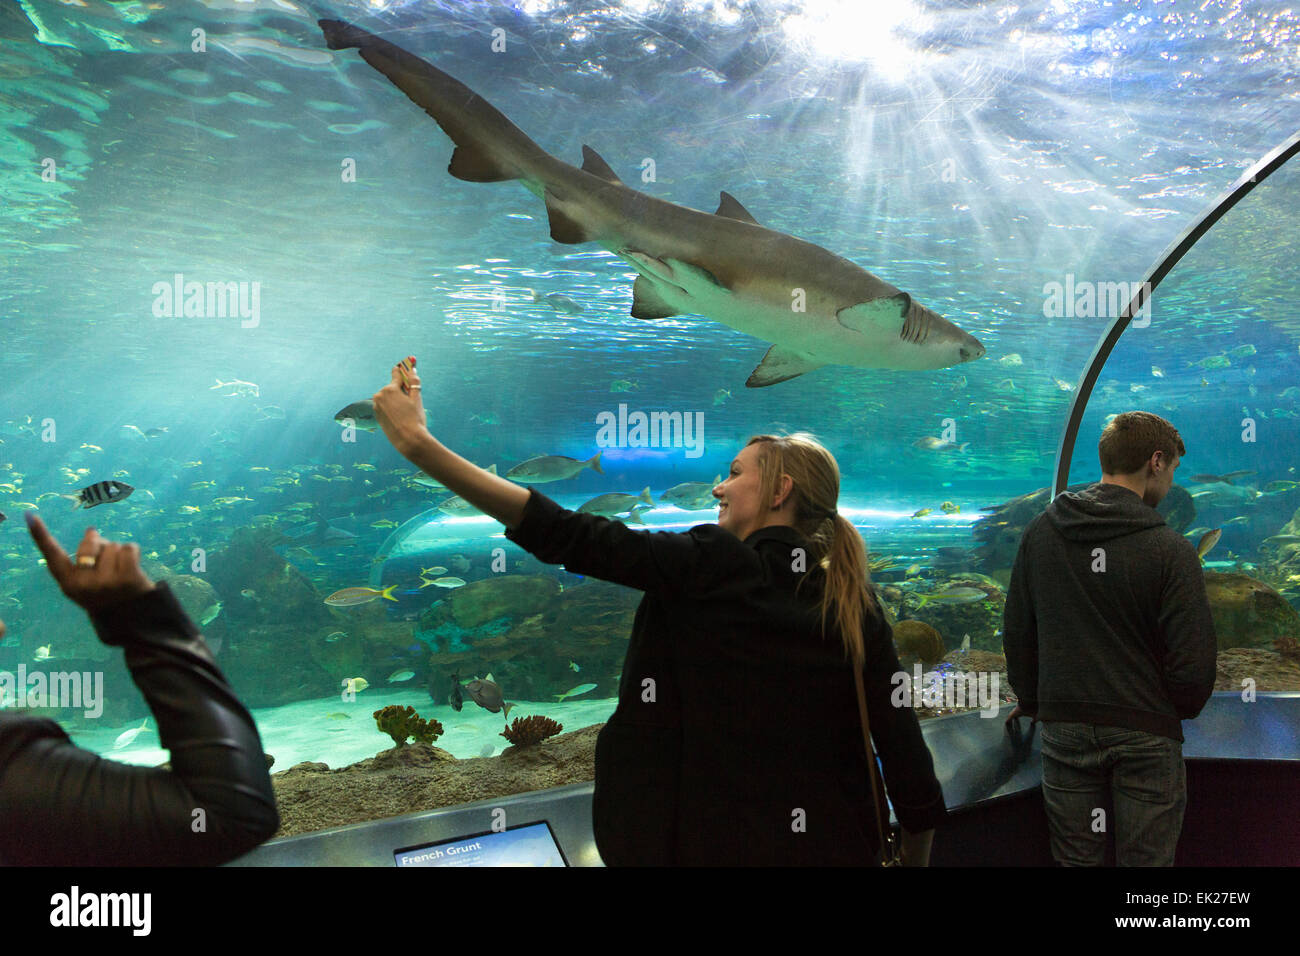 Canada, Ontario, Toronto, Ripley's Aquarium of Canada, woman taking a selfie with a shark swimming overhead Stock Photo